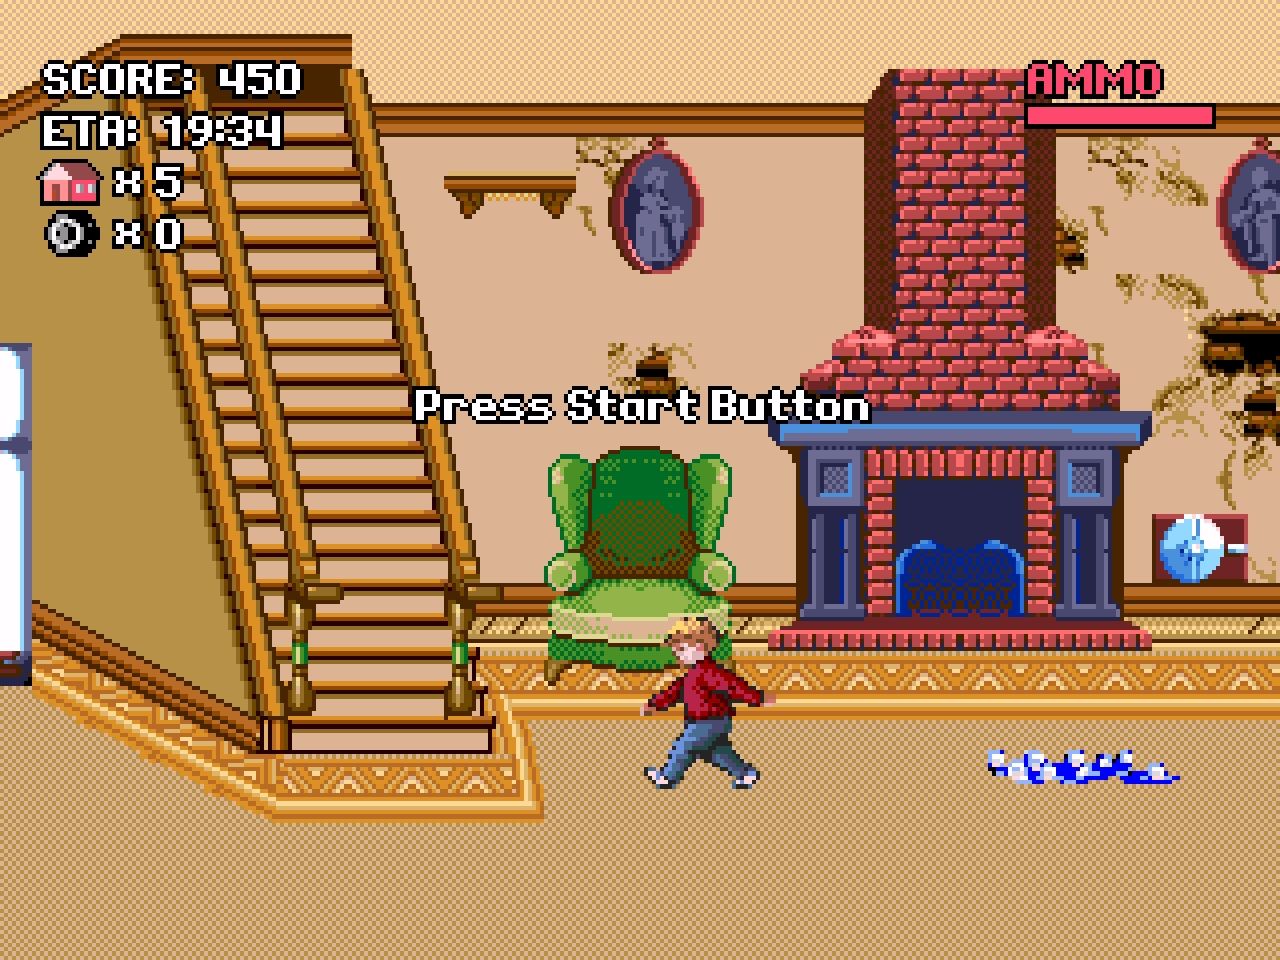 Игра один дома 2. Home Alone игра Sega. Sega Mega Drive 4 игра один дома. Один дома игра на сеге. Один дома игра на Денди.